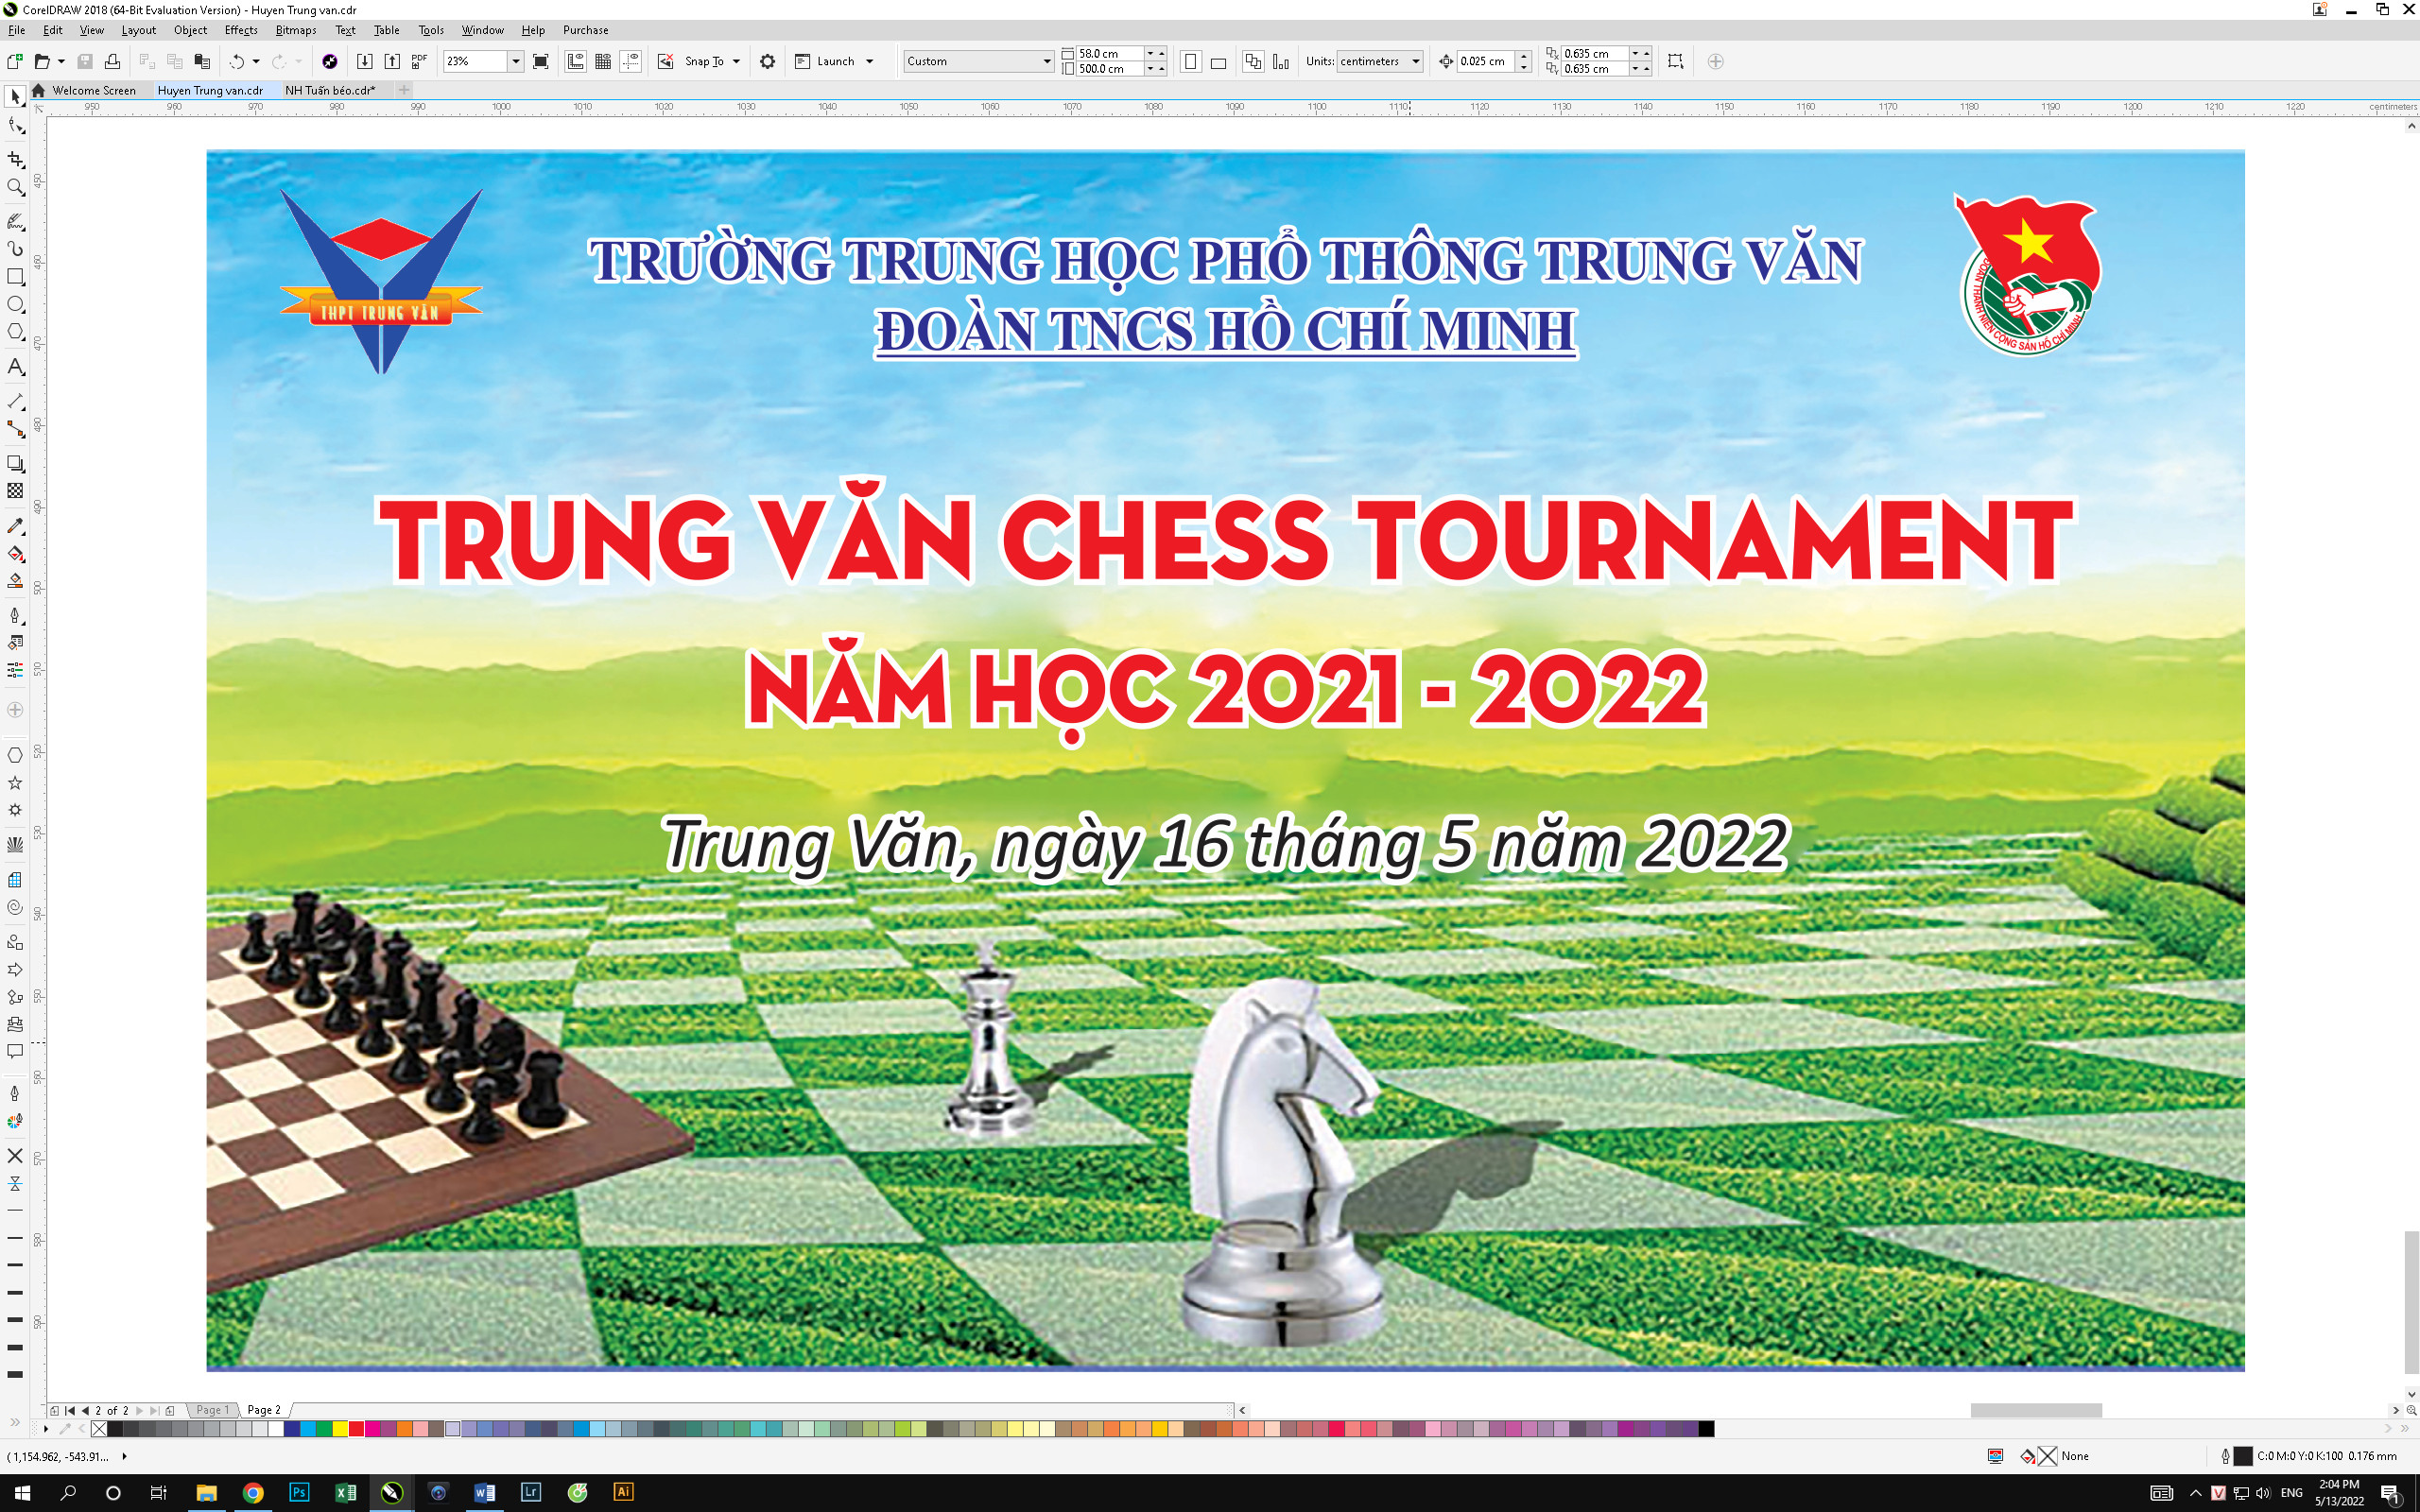 TRUNG VAN CHESS TOURNAMENT